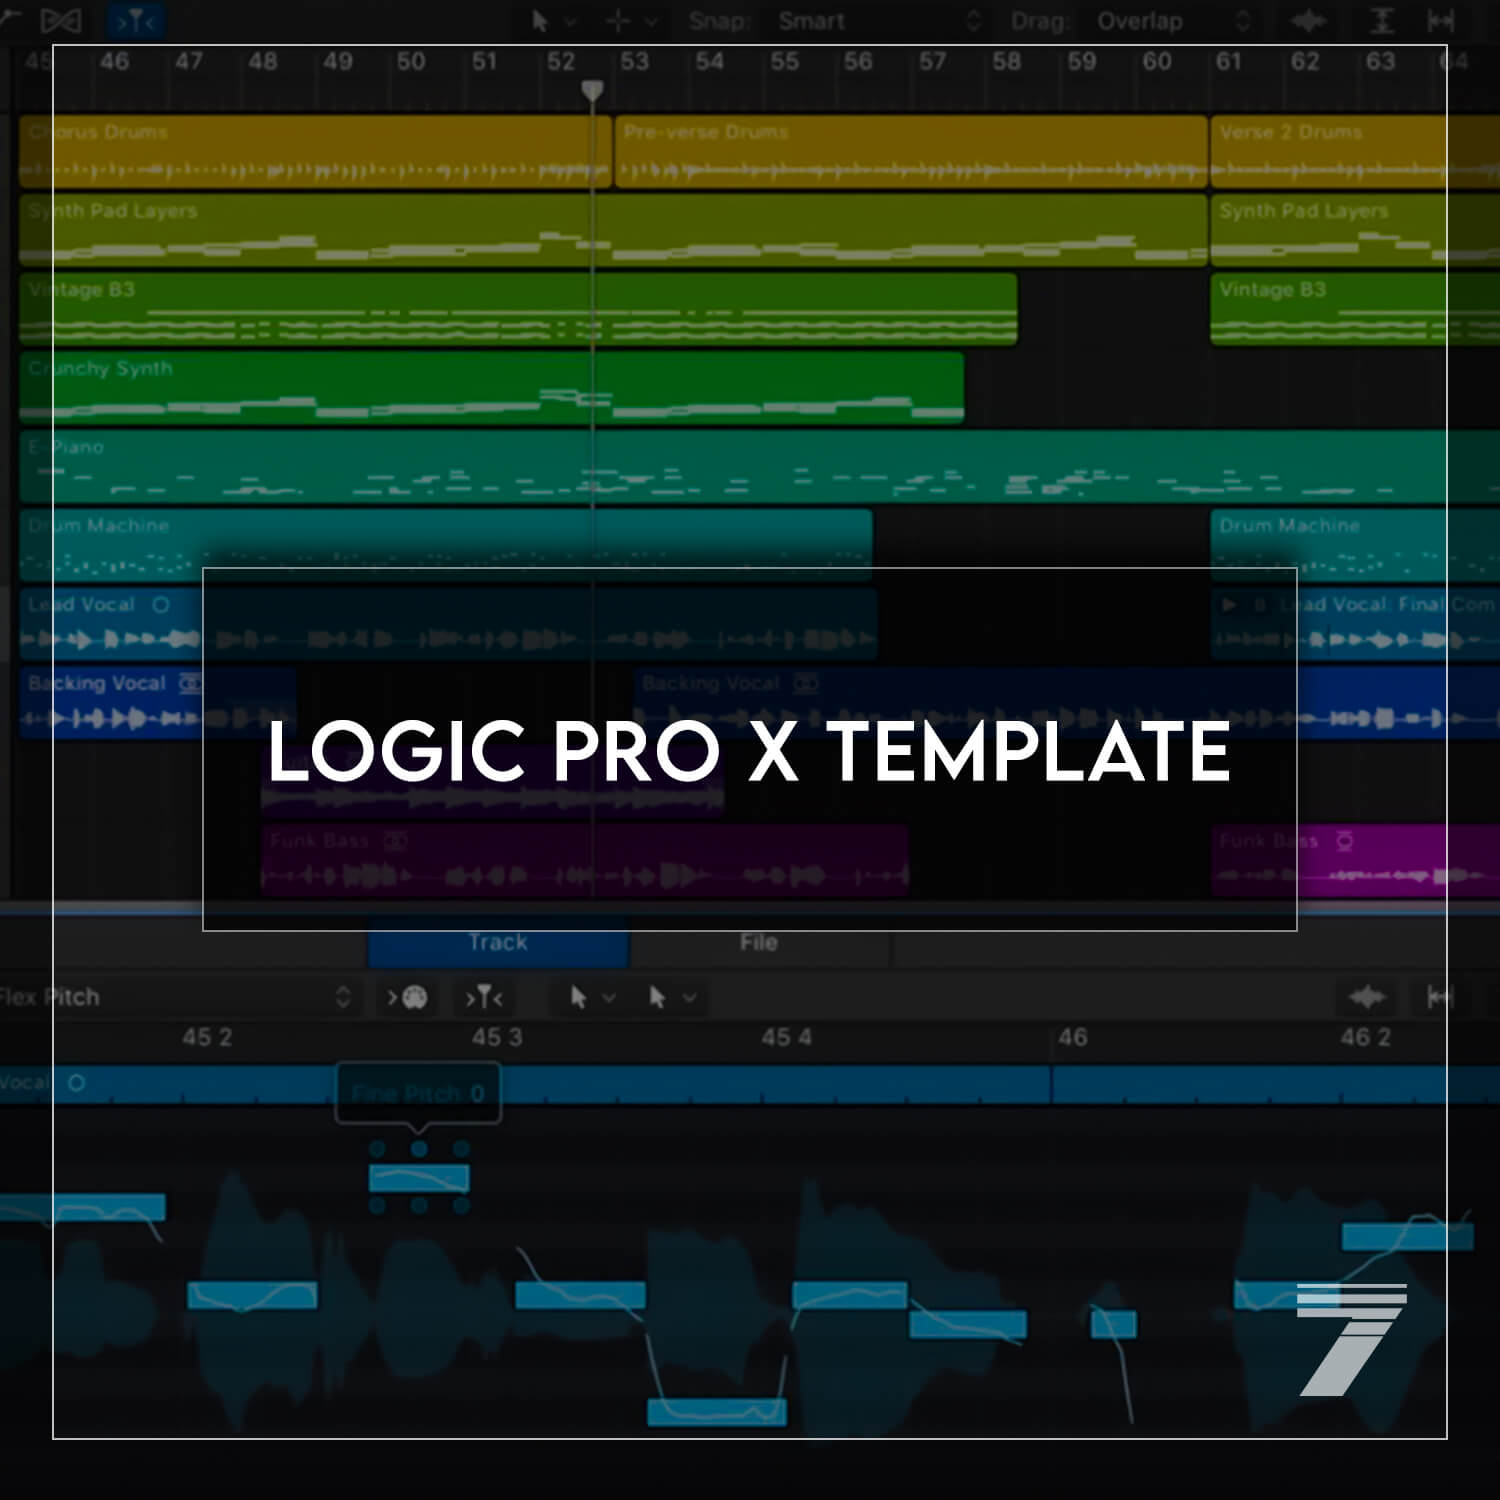 Logic Pro X Template - Free Download